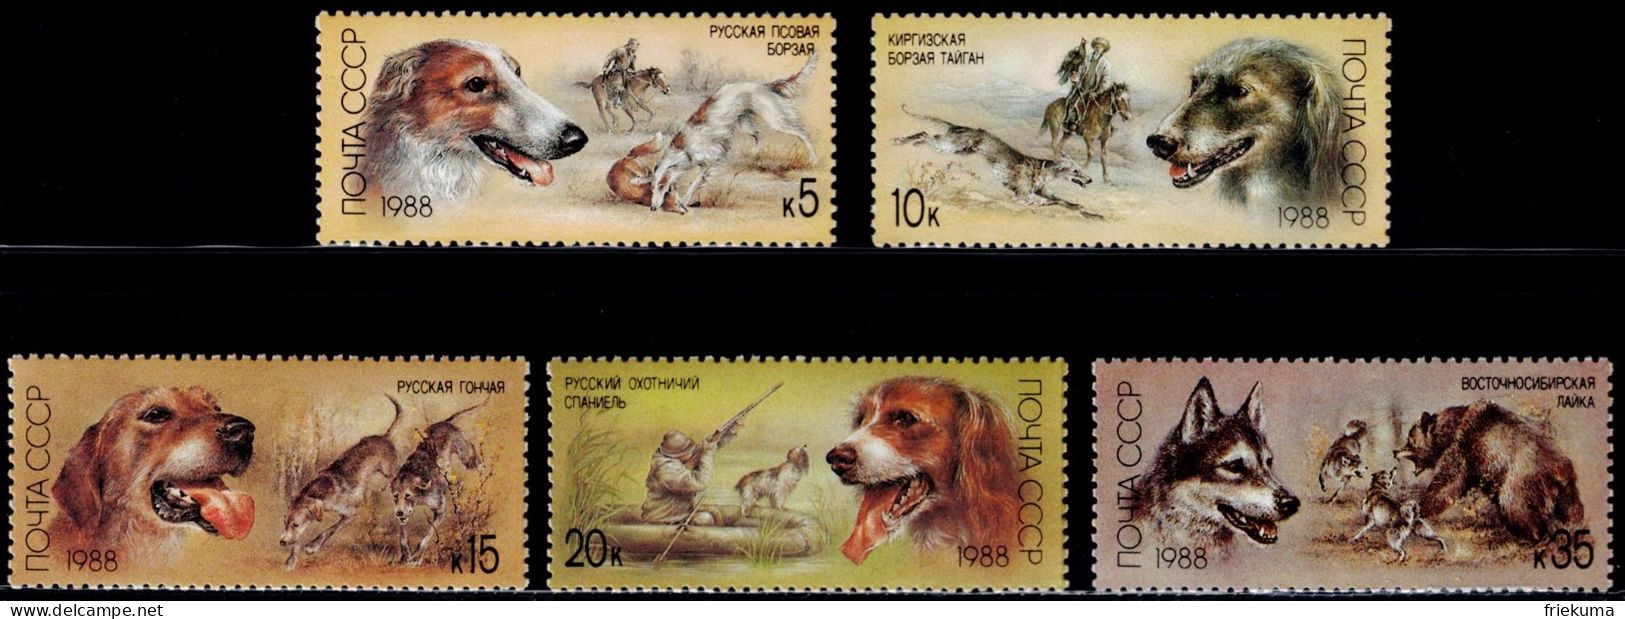 CCCP 1988, Dogs: Barsoi, Taigan, Russian Hunting Dog, Russian Spaniel, East Siberian Polar Dog (Laika), MiNr. 5827-5831 - Cani